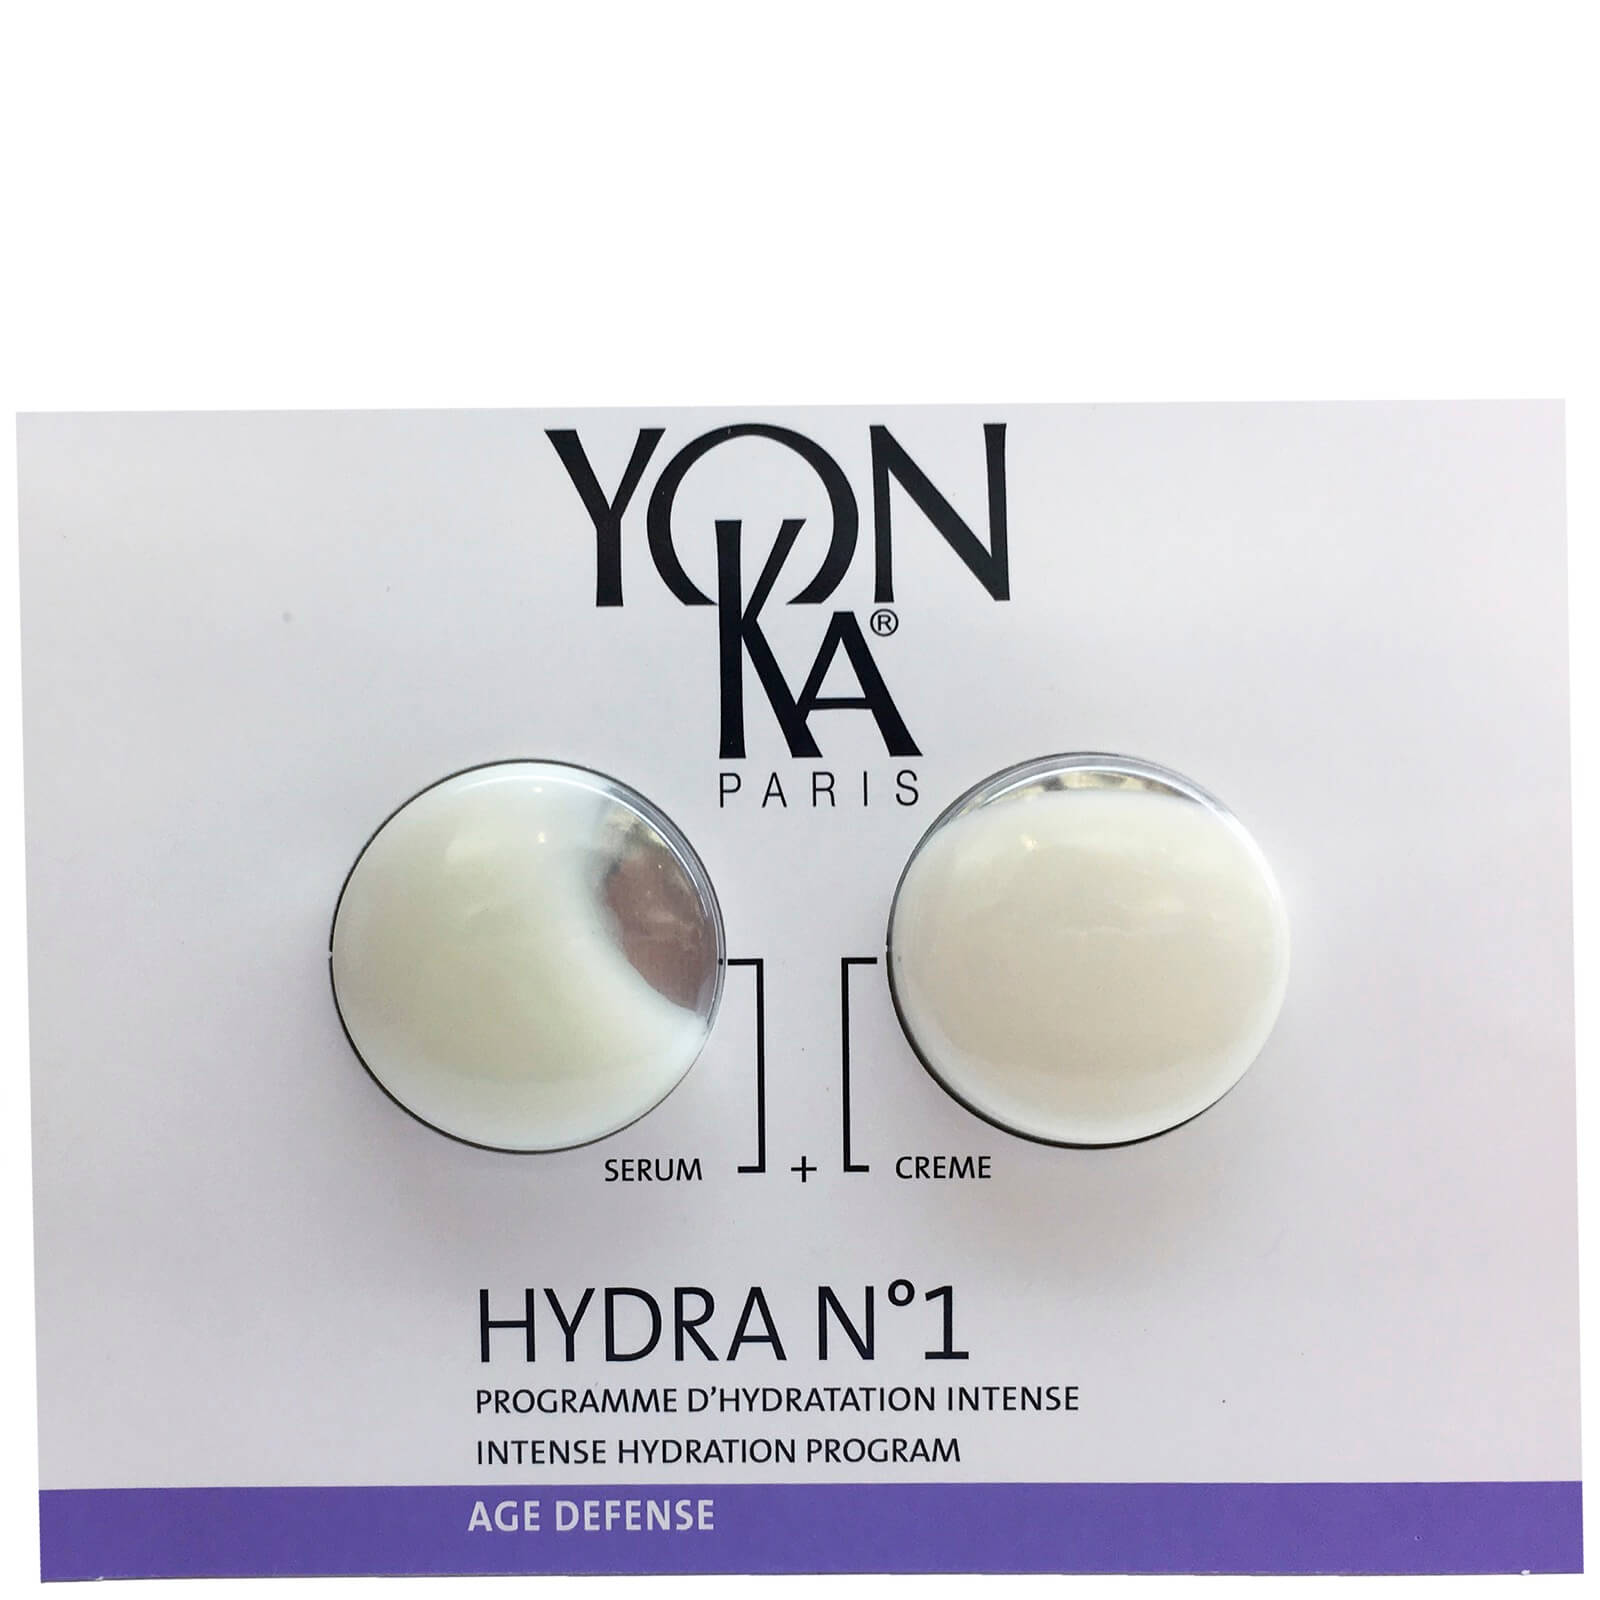 Yon-ka Paris Skincare Hydra N1 Creme In White